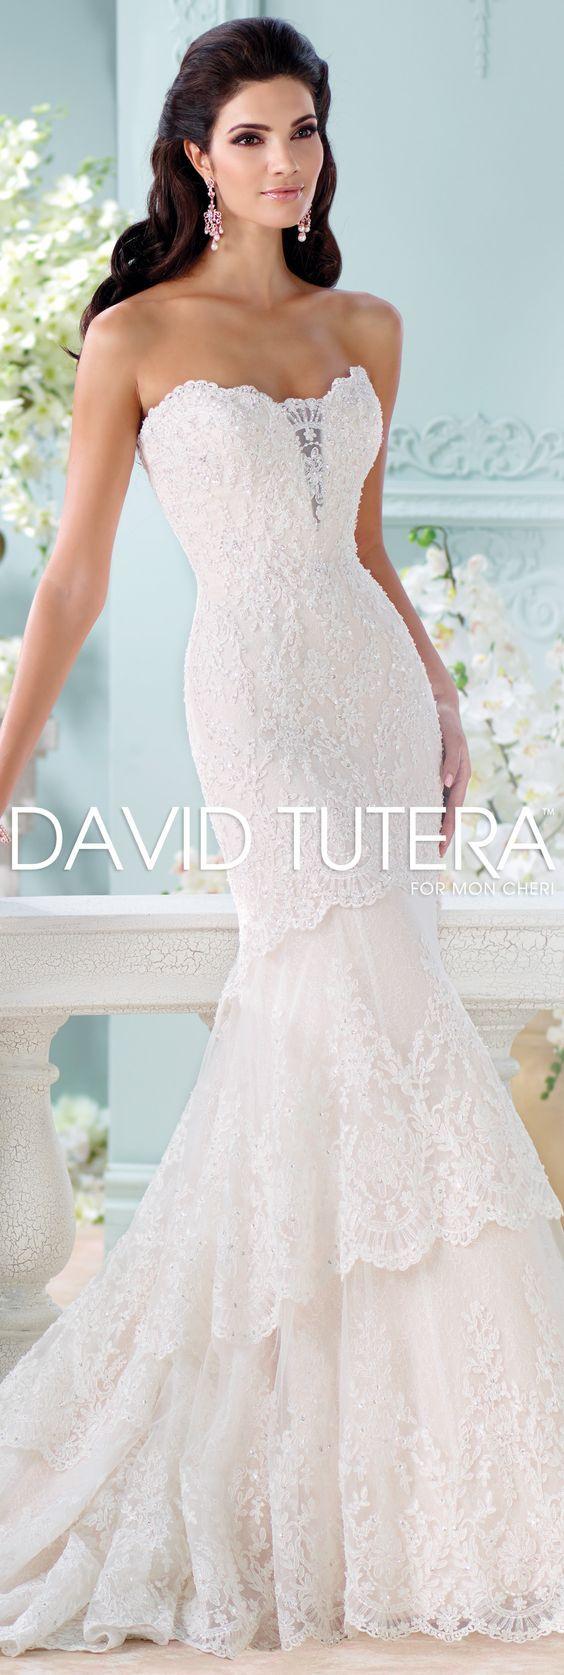 Hochzeit - Gorgeous Wedding Dresses By David Tutera For Mon Cheri